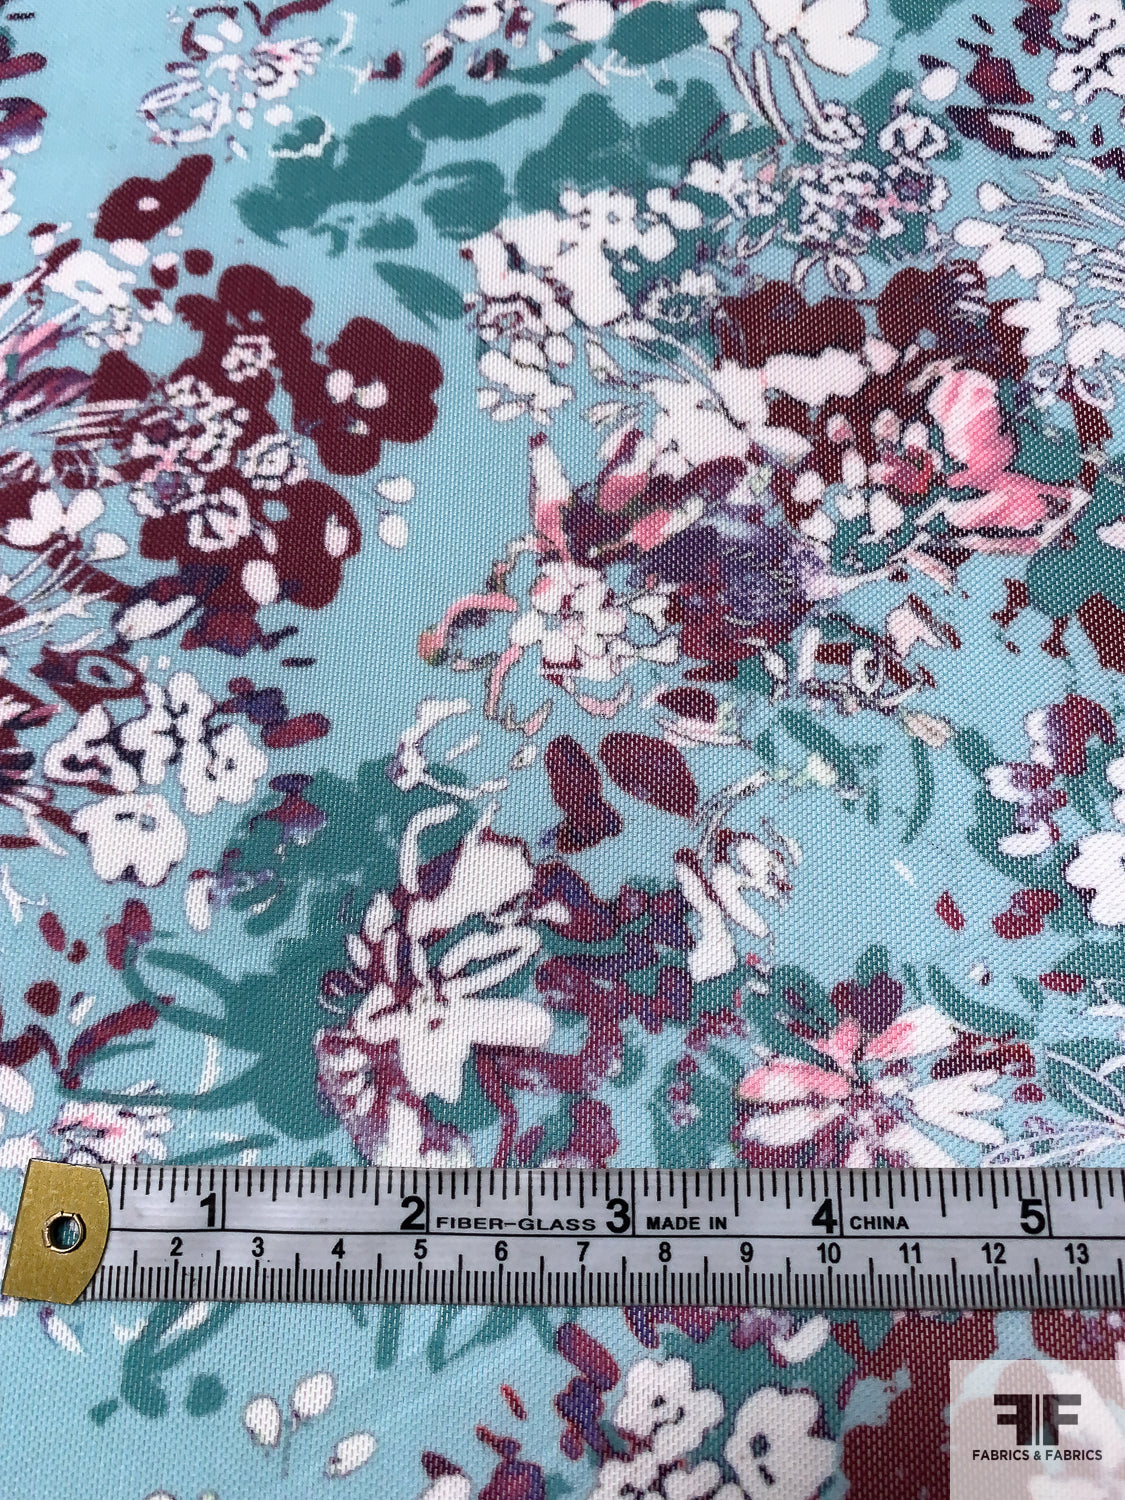 Floral Bundles Printed Netting - Aqua Blue / Teal / Berry Pinks / White